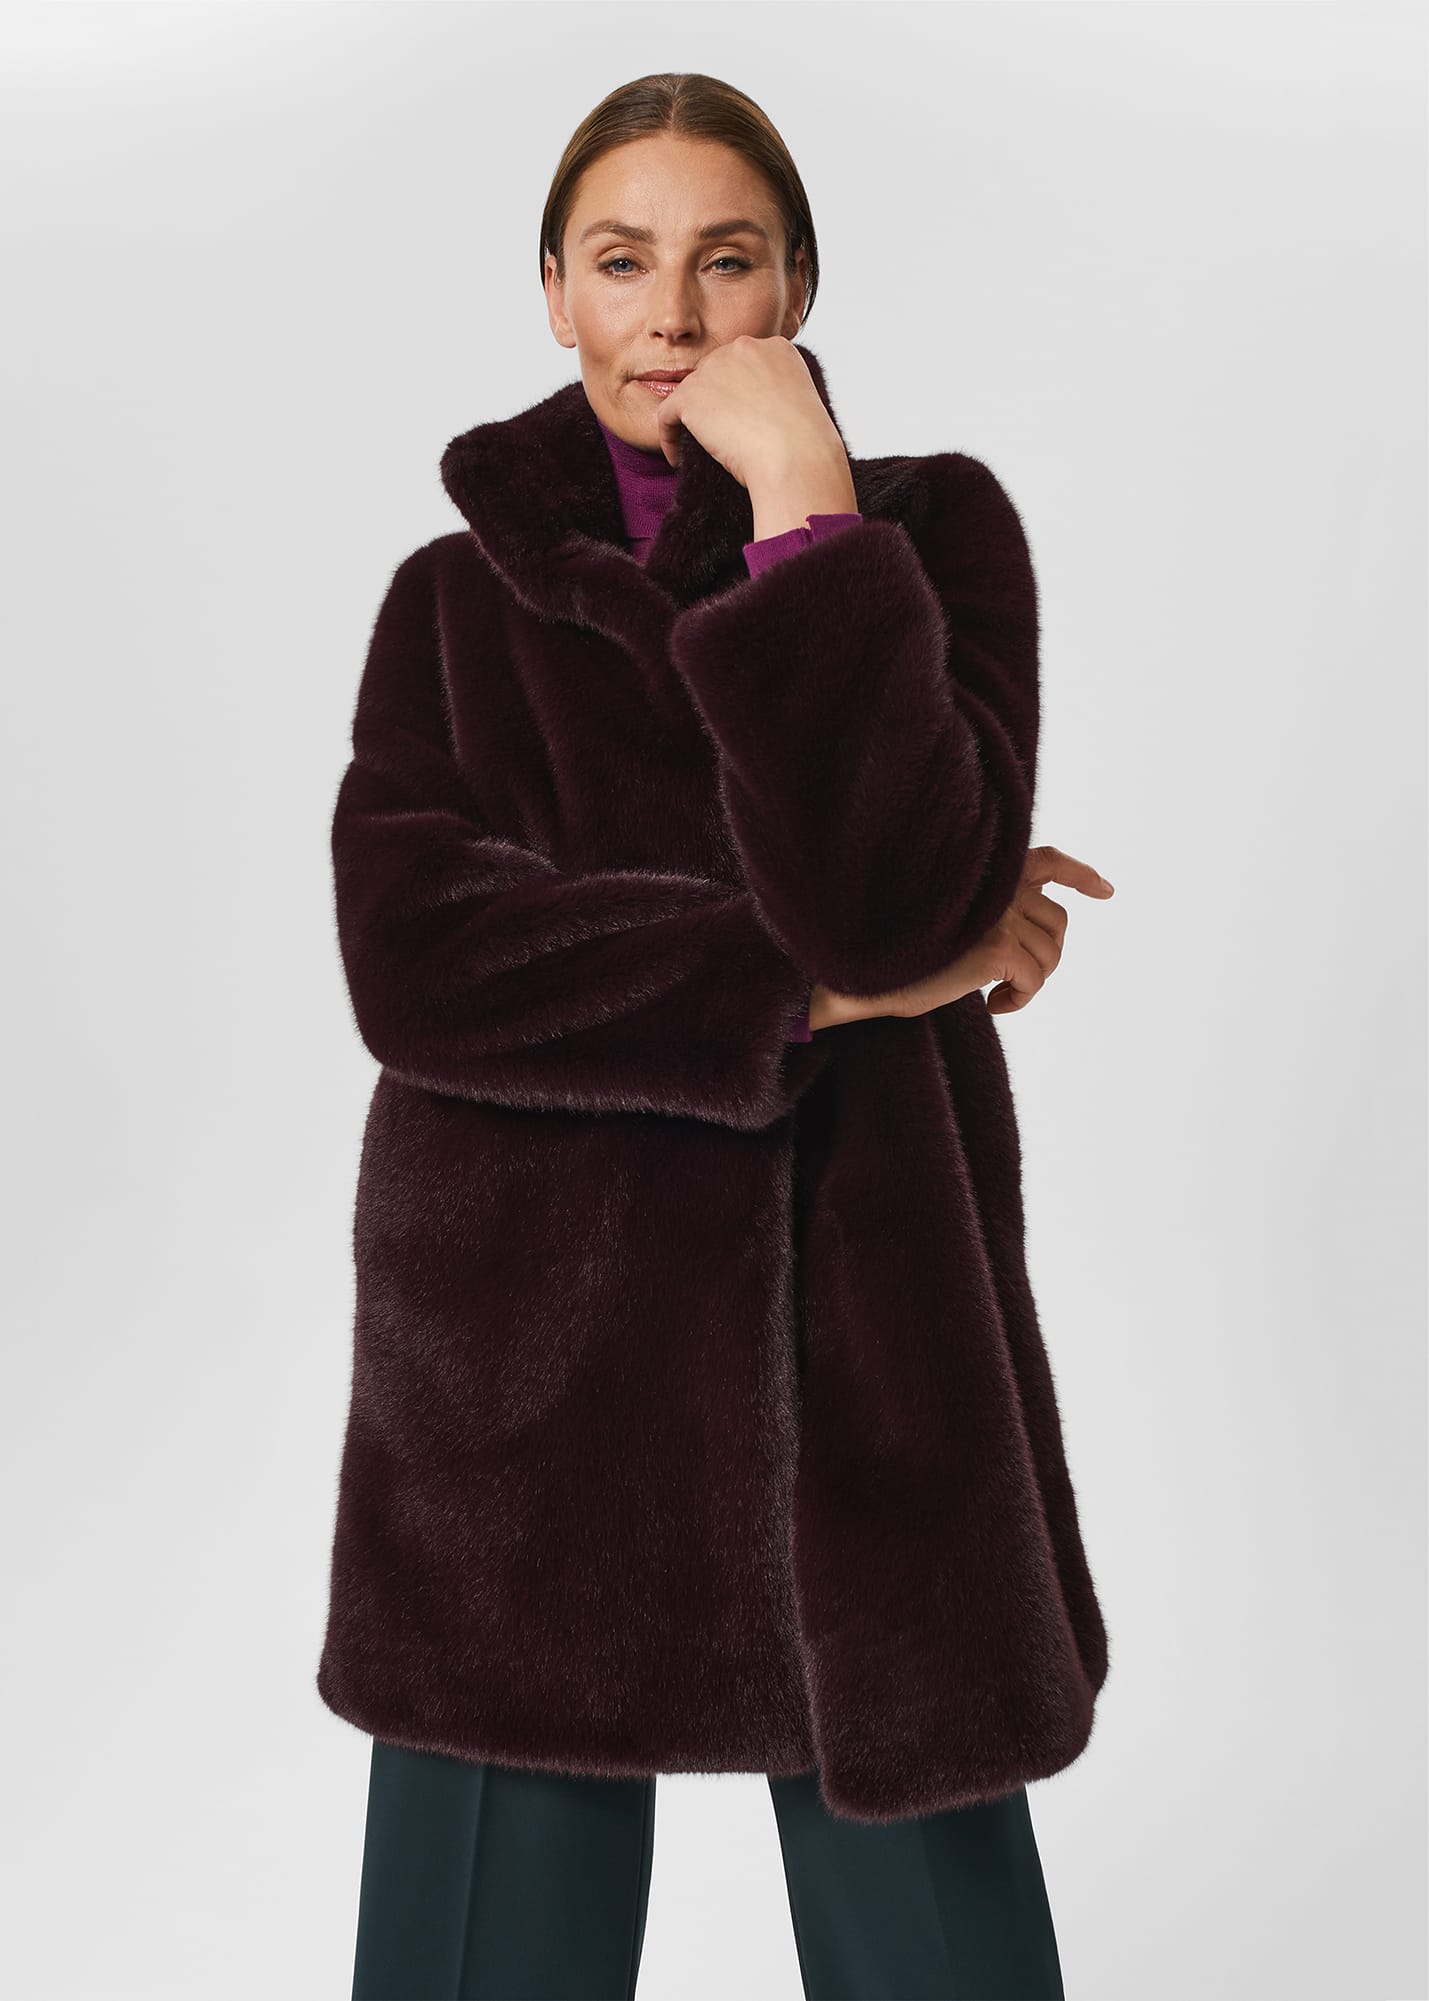 Hobbs Women's Maddox Faux Fur Coat - Dark Berry